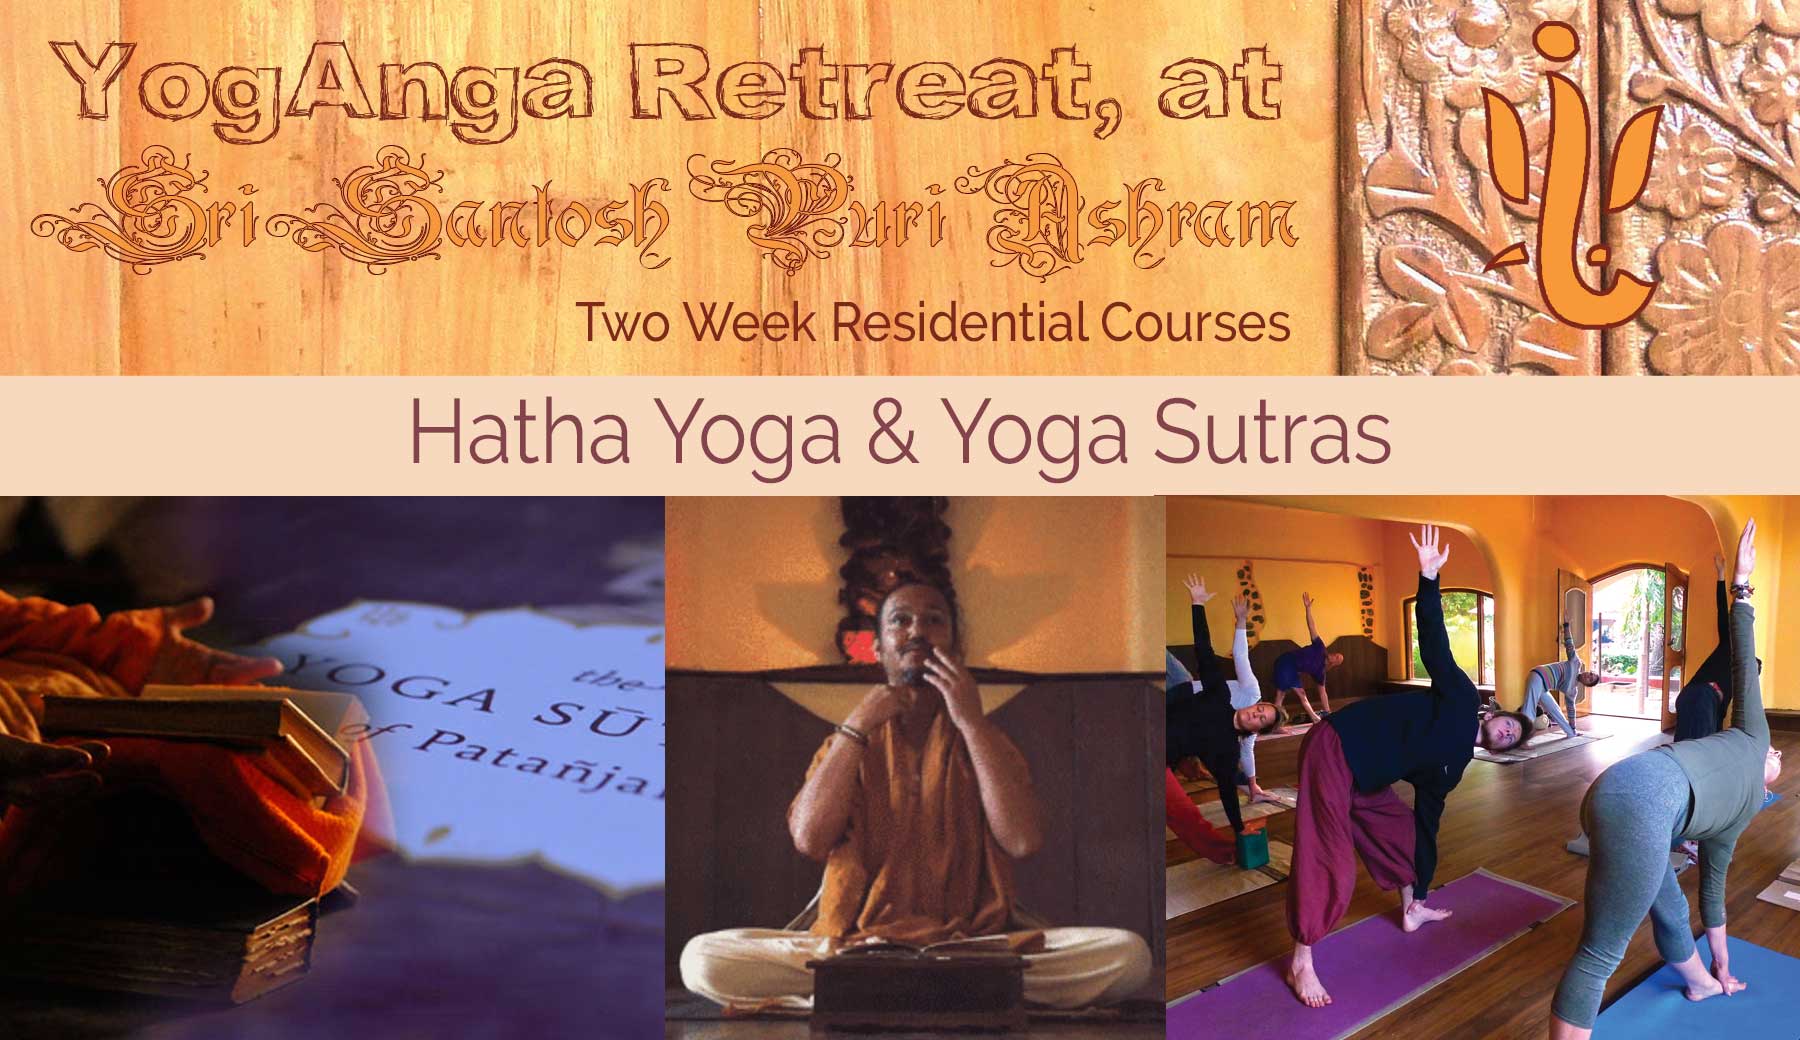 yoganga.org - YogAnga Retreat at Sri Santosh Puri Ashram - Hatha Yoga & Yoga Sutras two week Residential Course, eight limbs, raja yoga